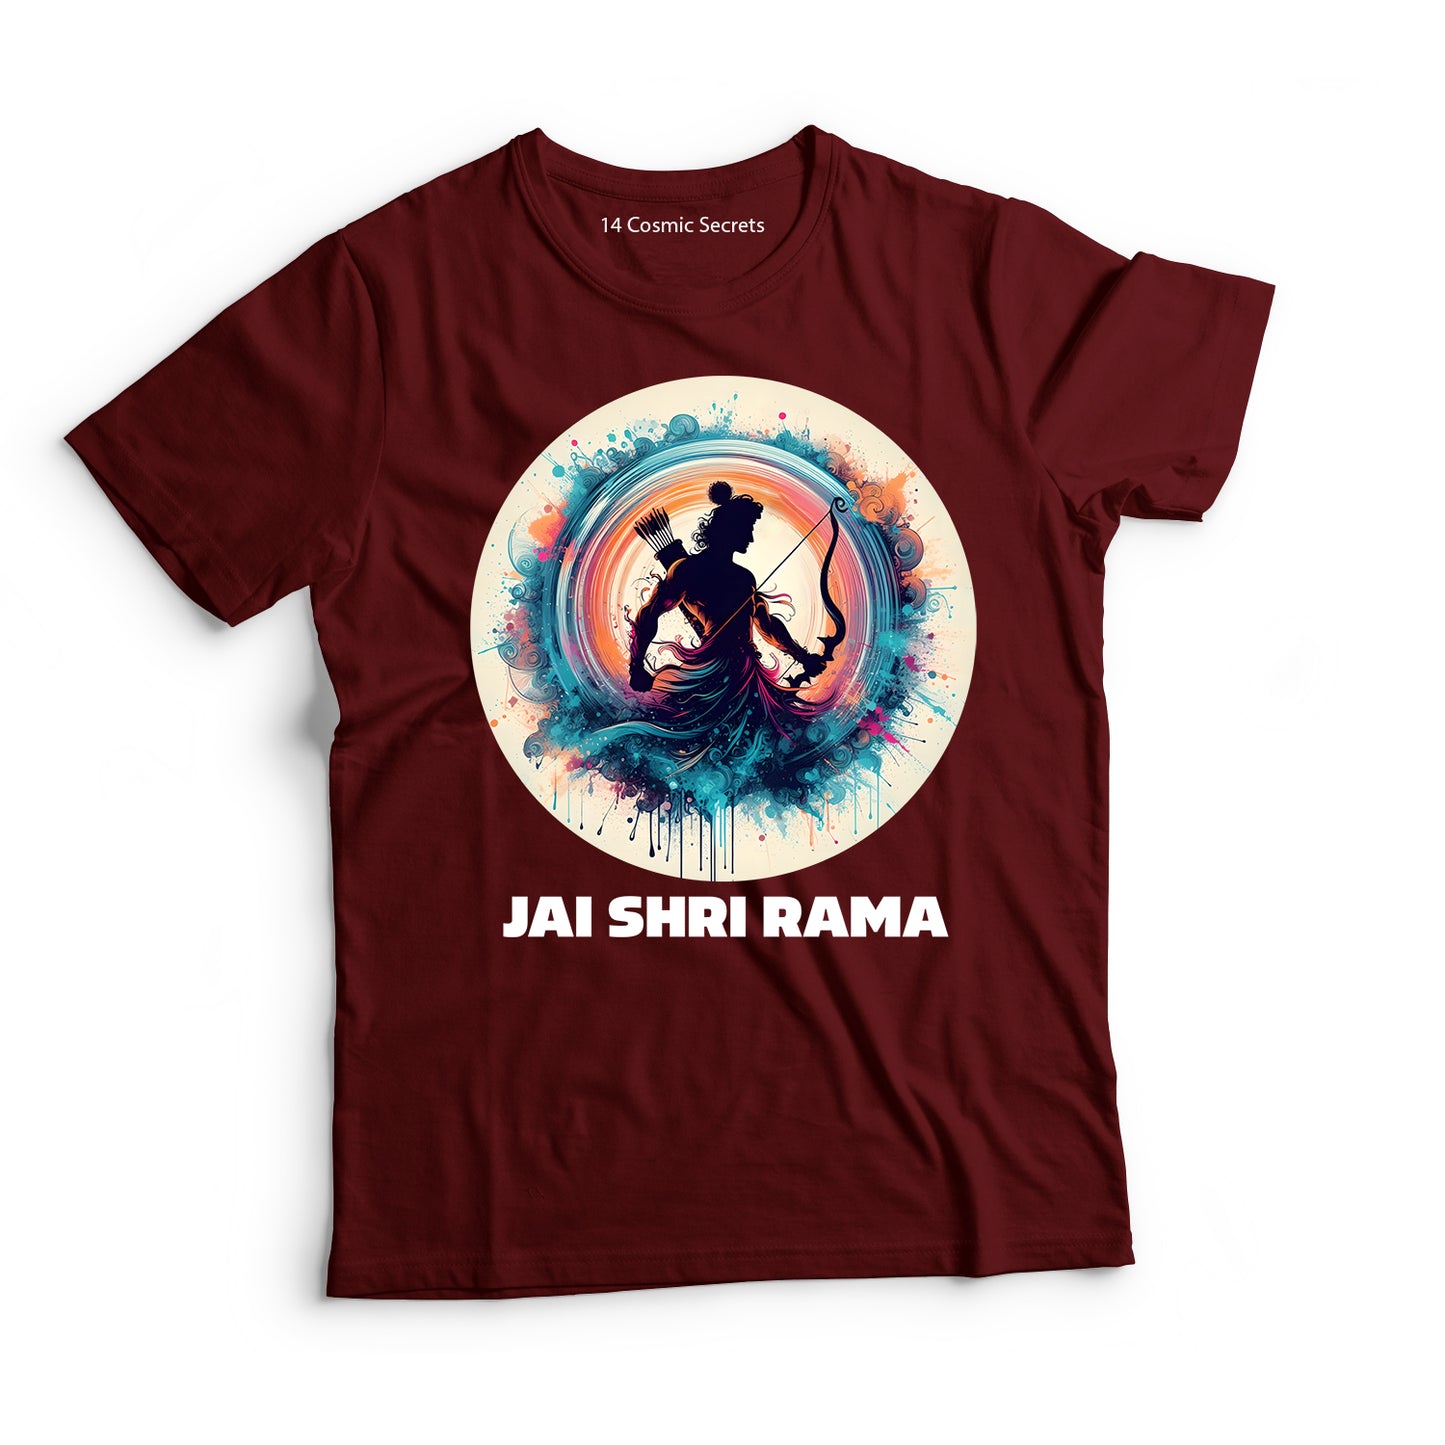 Rama's Resolve: Destiny's Hero Graphic Printed T-Shirt for Men Cotton T-Shirt Original Super Heroes of India T-Shirt